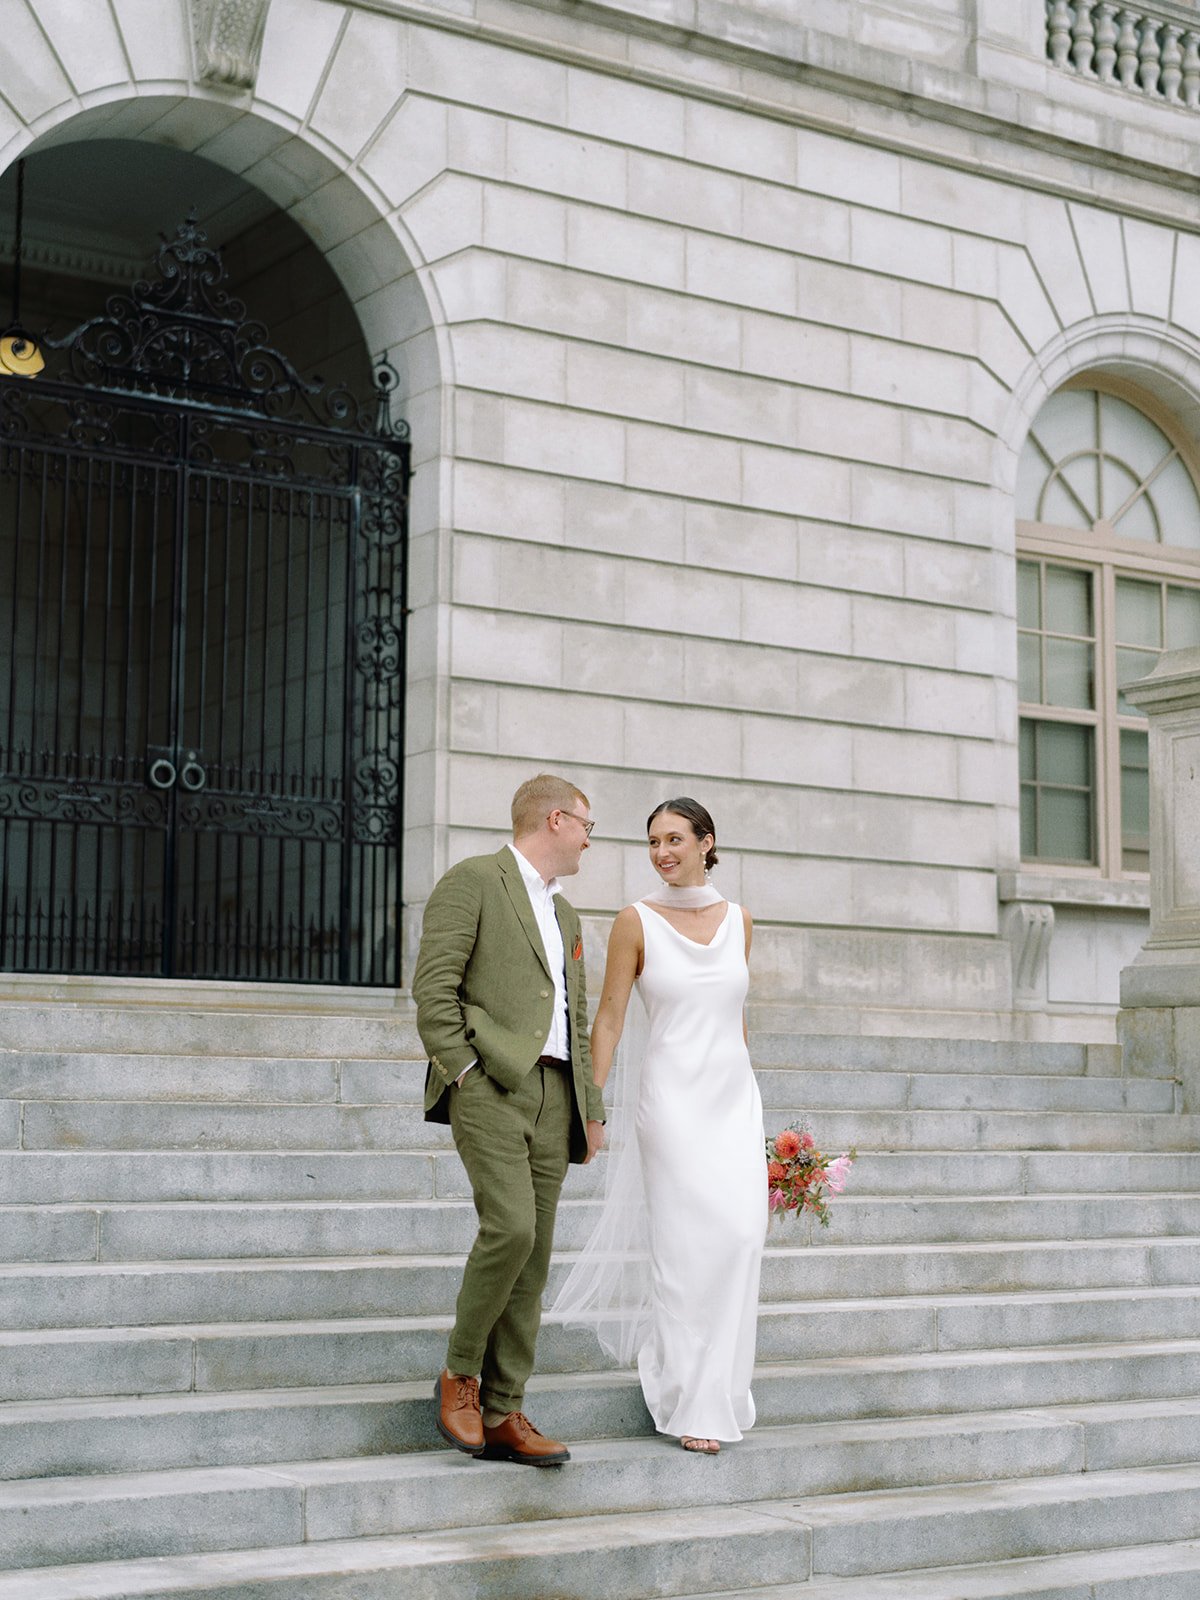 Best-Film-35mm-Austin-Wedding-Photographer-Portland-Maine-City-Hall-Super8-102.jpg